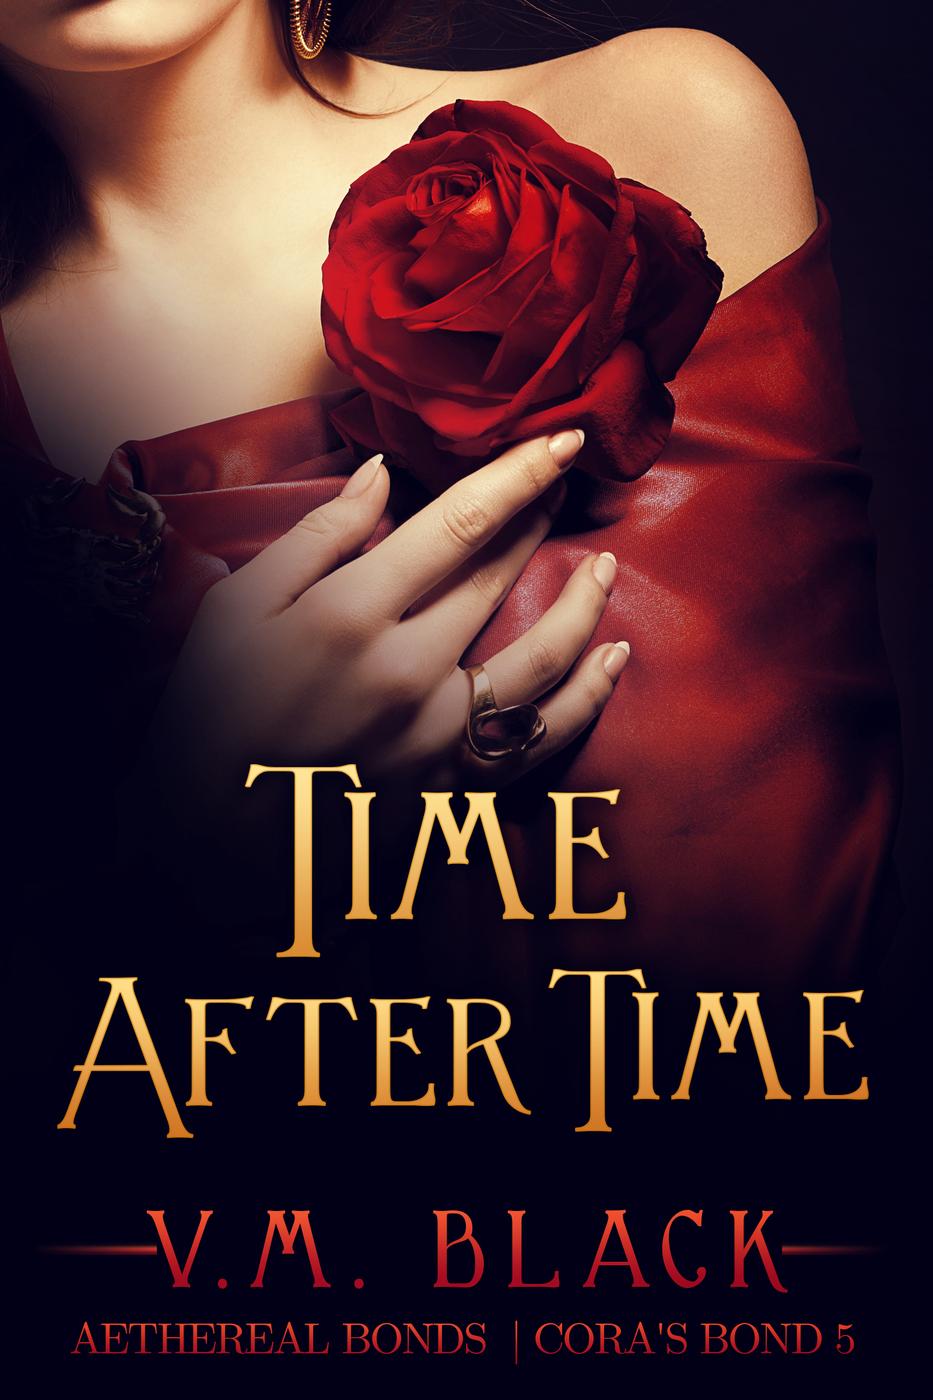 Time After Time (Cora's Bond) (2015) by V. M. Black